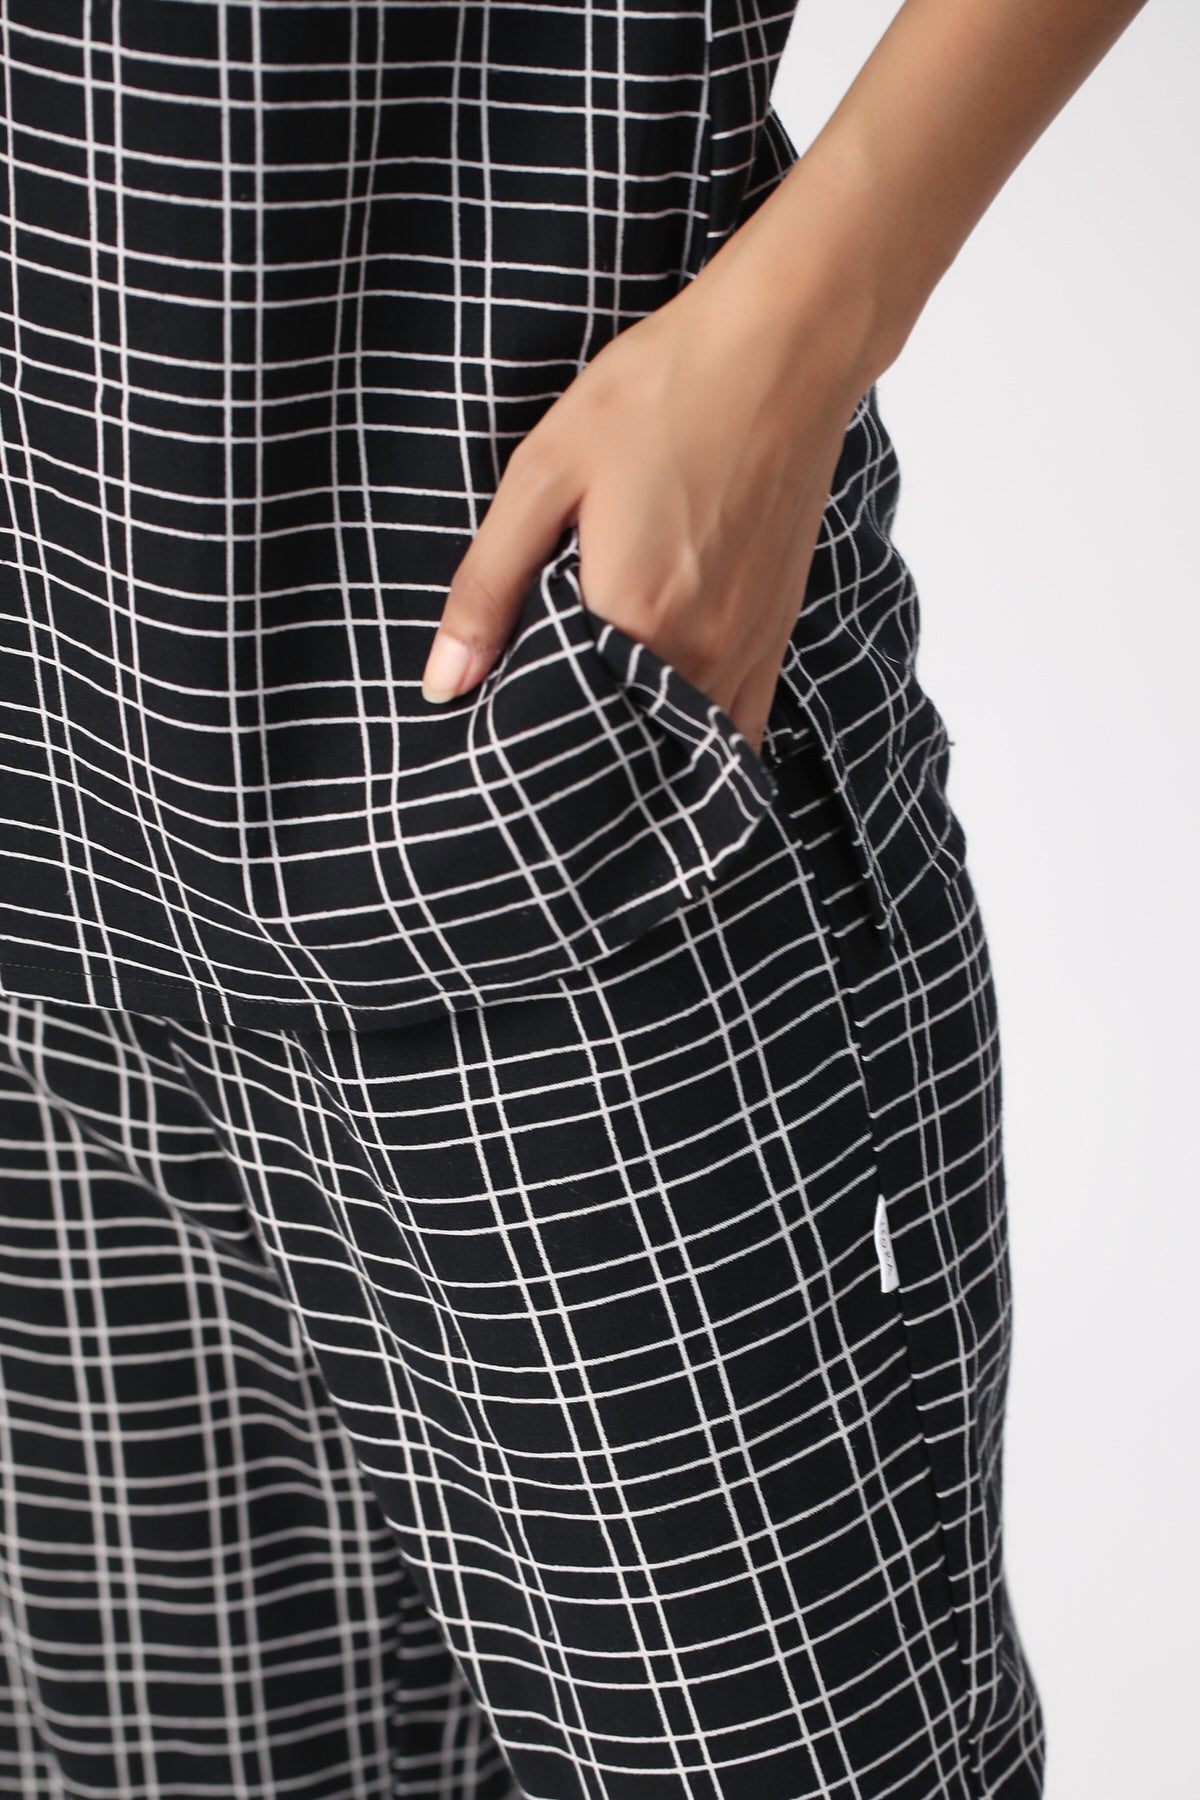 Checkered Black Khadi Cotton Loungewear Set